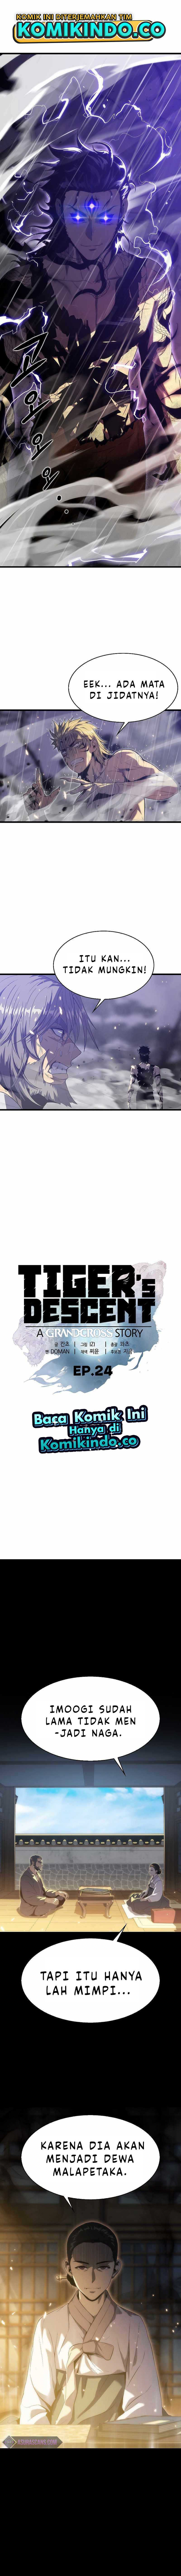 Tiger’s Descent Chapter 24